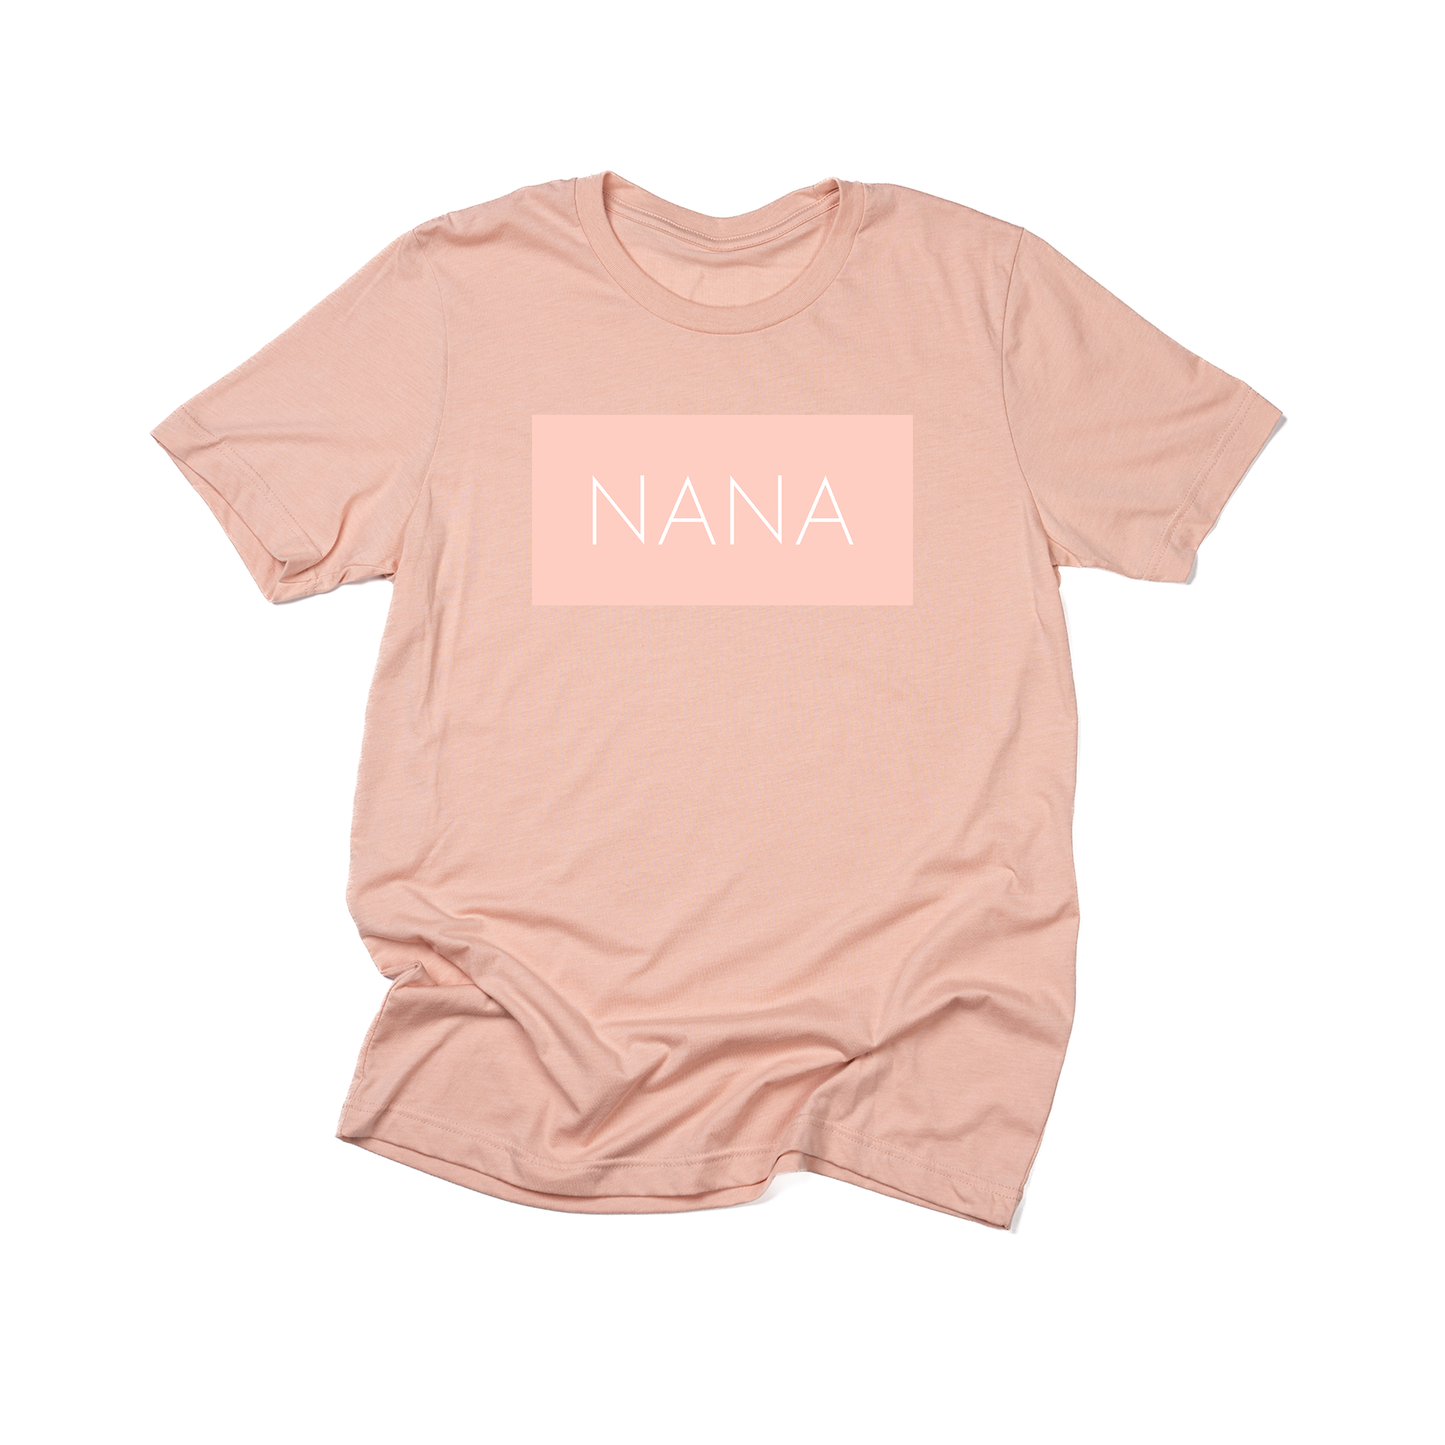 Nana (Boxed Collection, Ballerina Pink Box/White Text) - Tee (Peach)